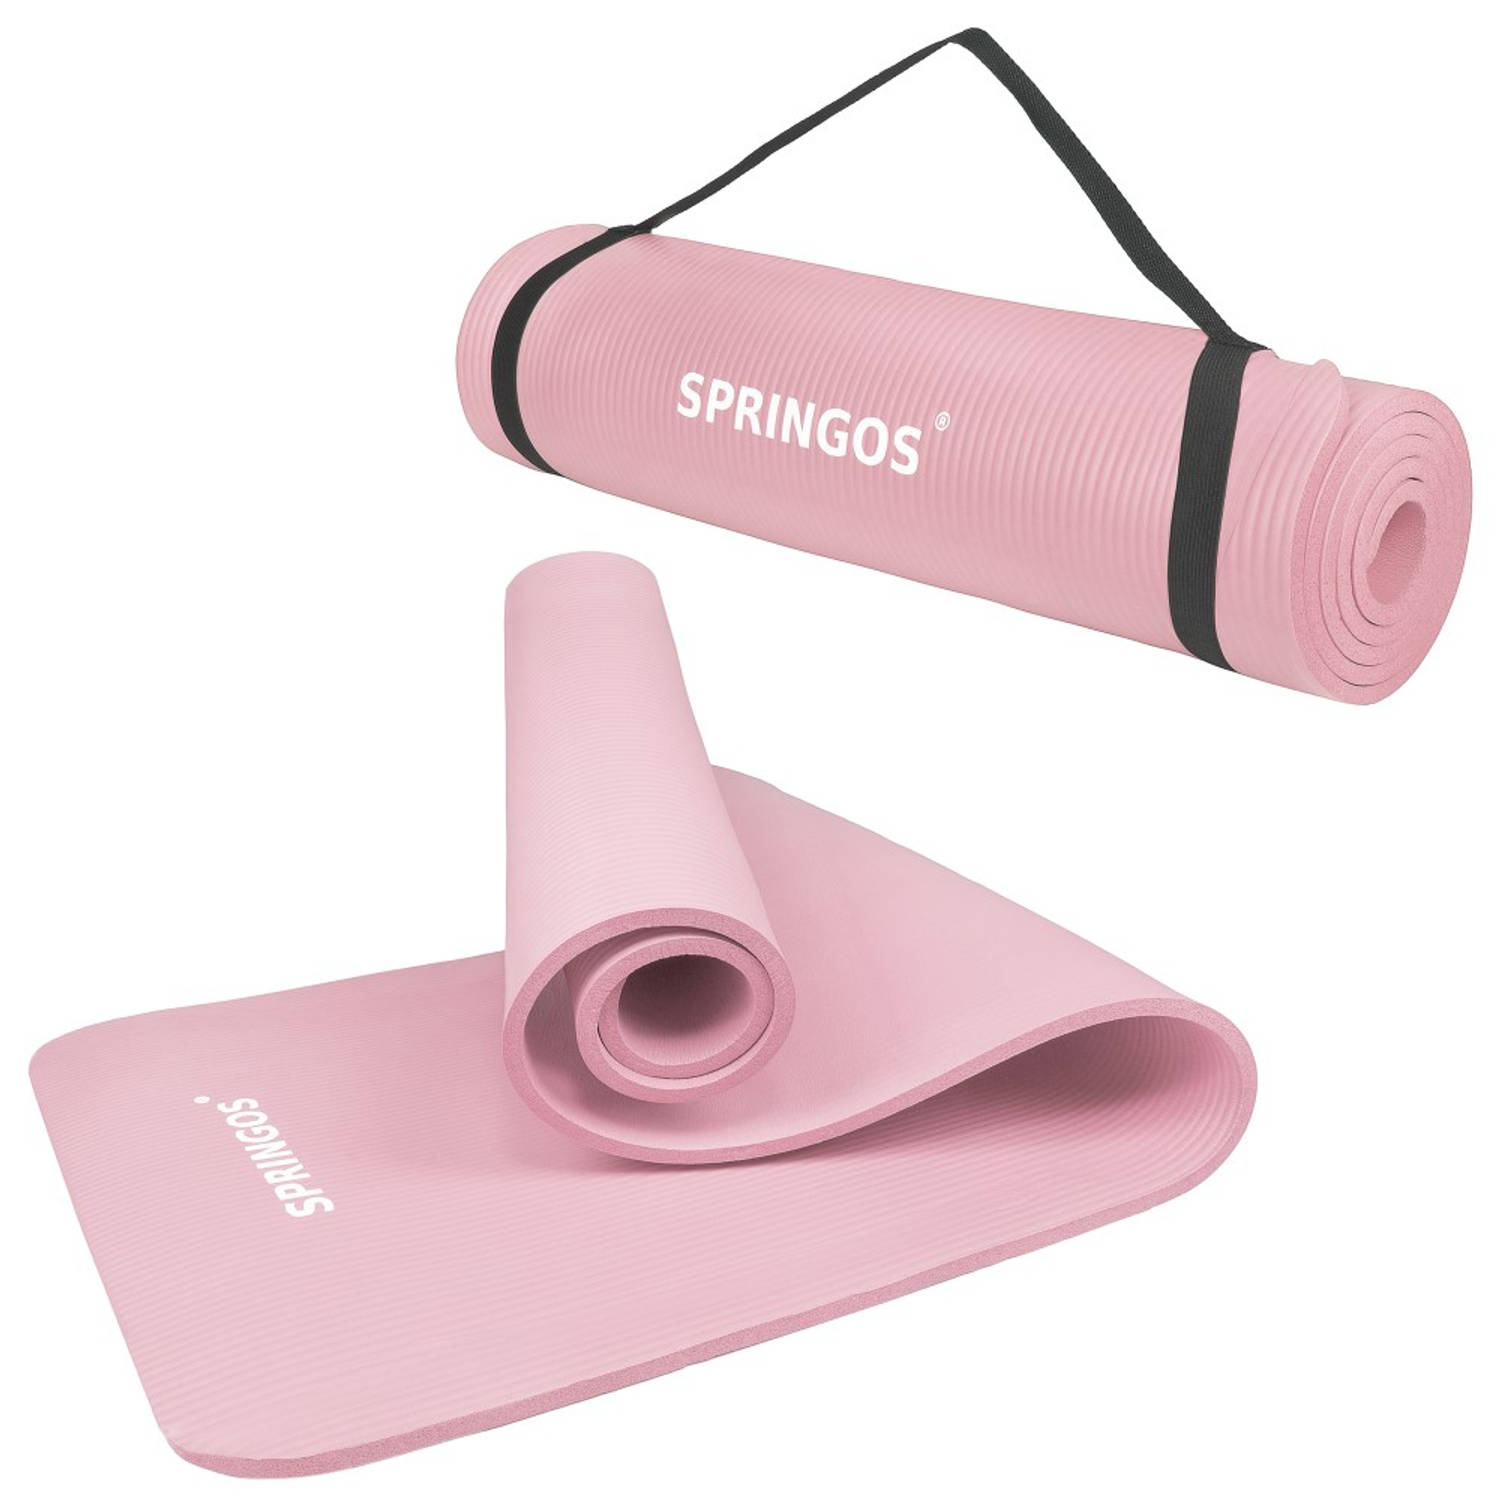 Springos Yoga Mat - Fitnessmat - Premium Kwaliteit - Anti Slip - 61 x 183 x 1 cm - Roze